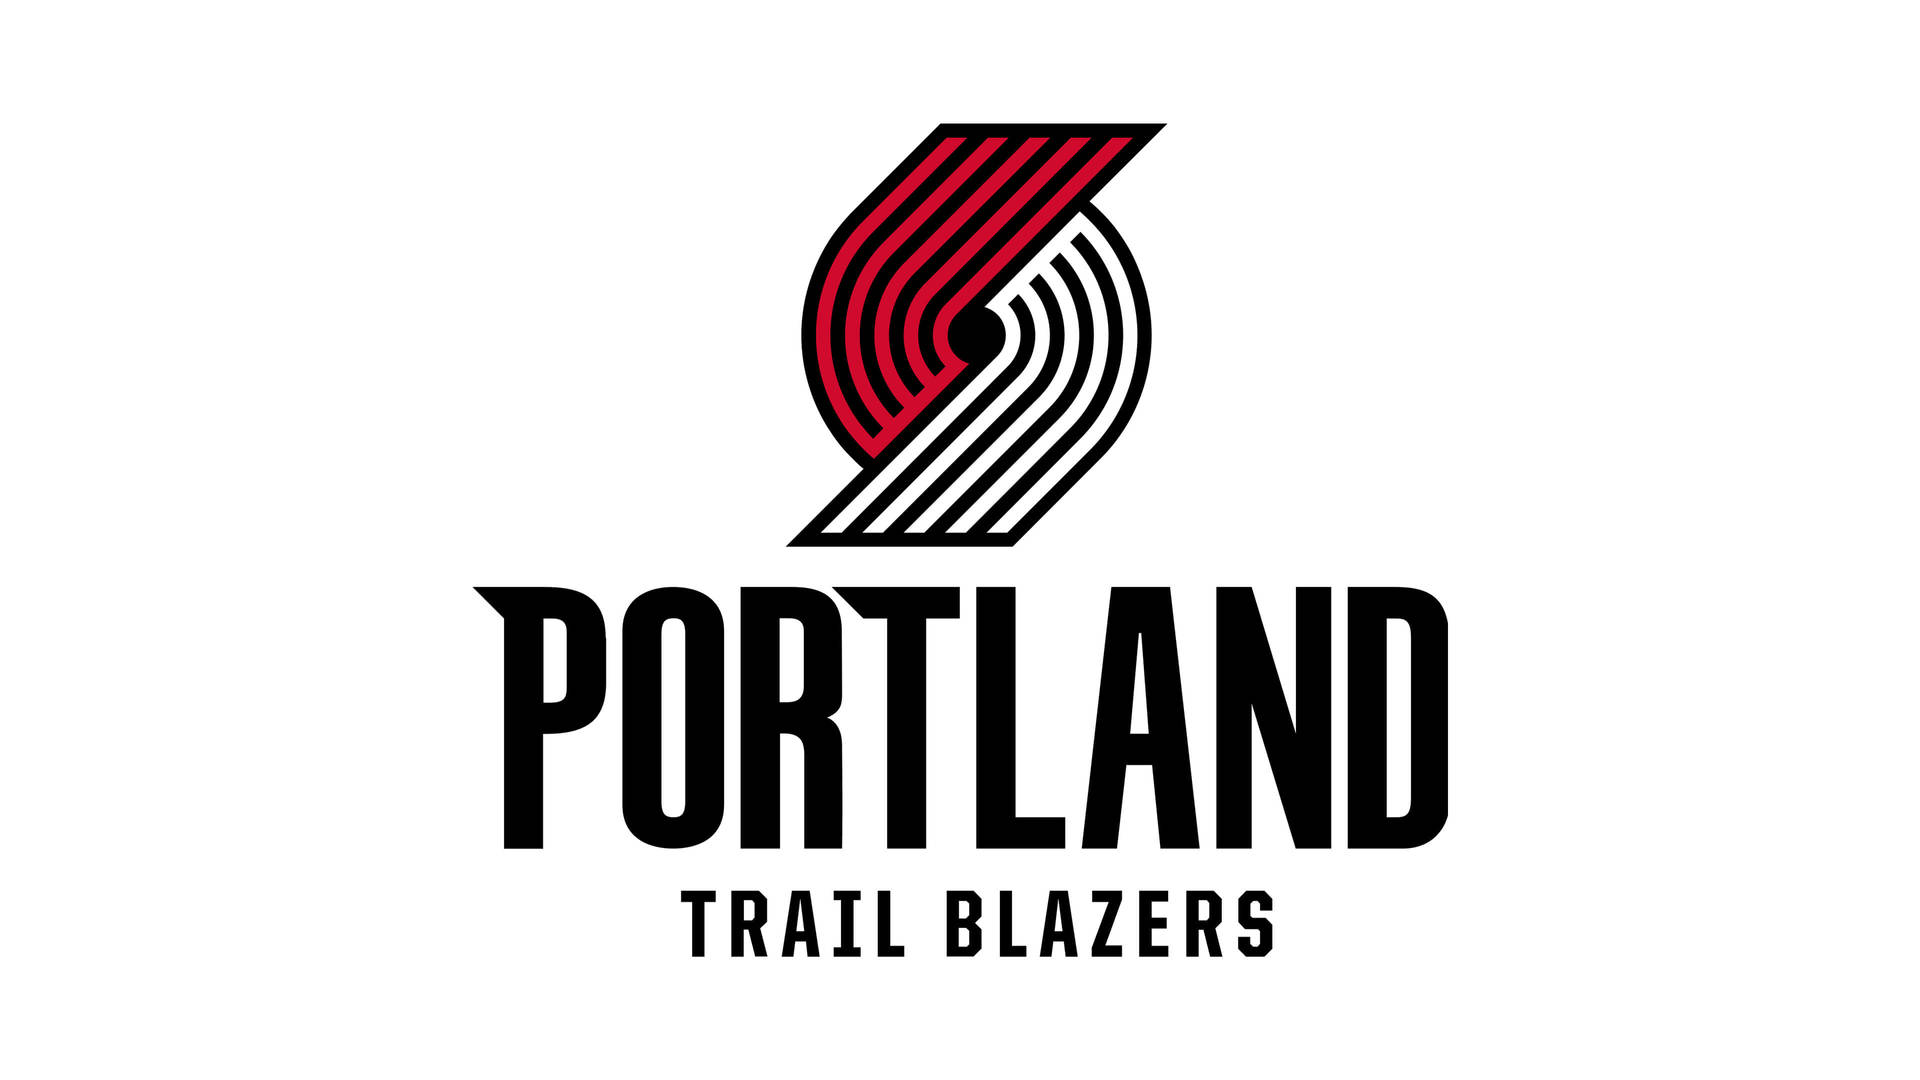 200+] Portland Trail Blazers Wallpapers